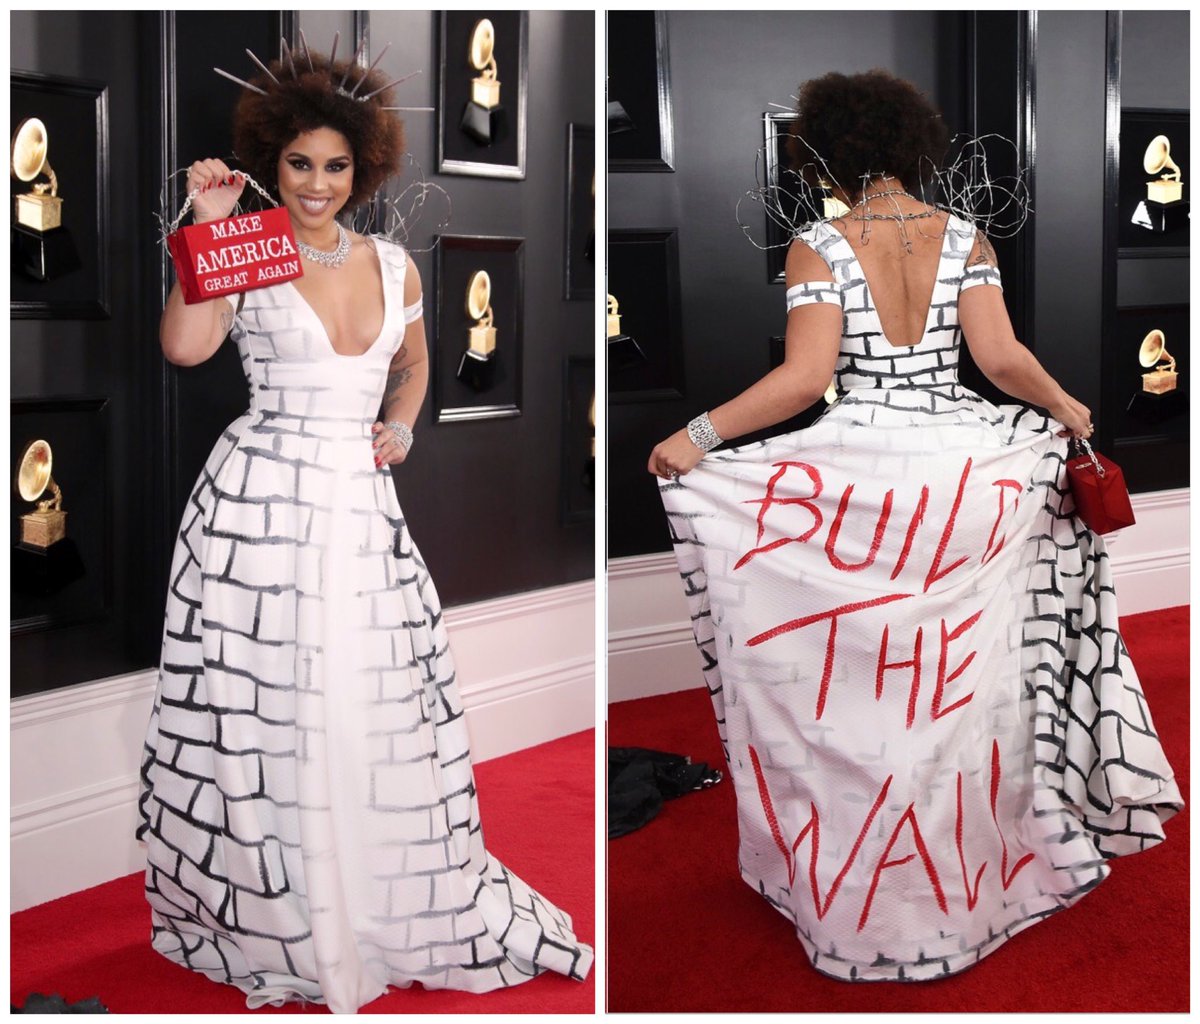 Pro-Trump singer flaunts 'Build the Wall' dress at Grammys